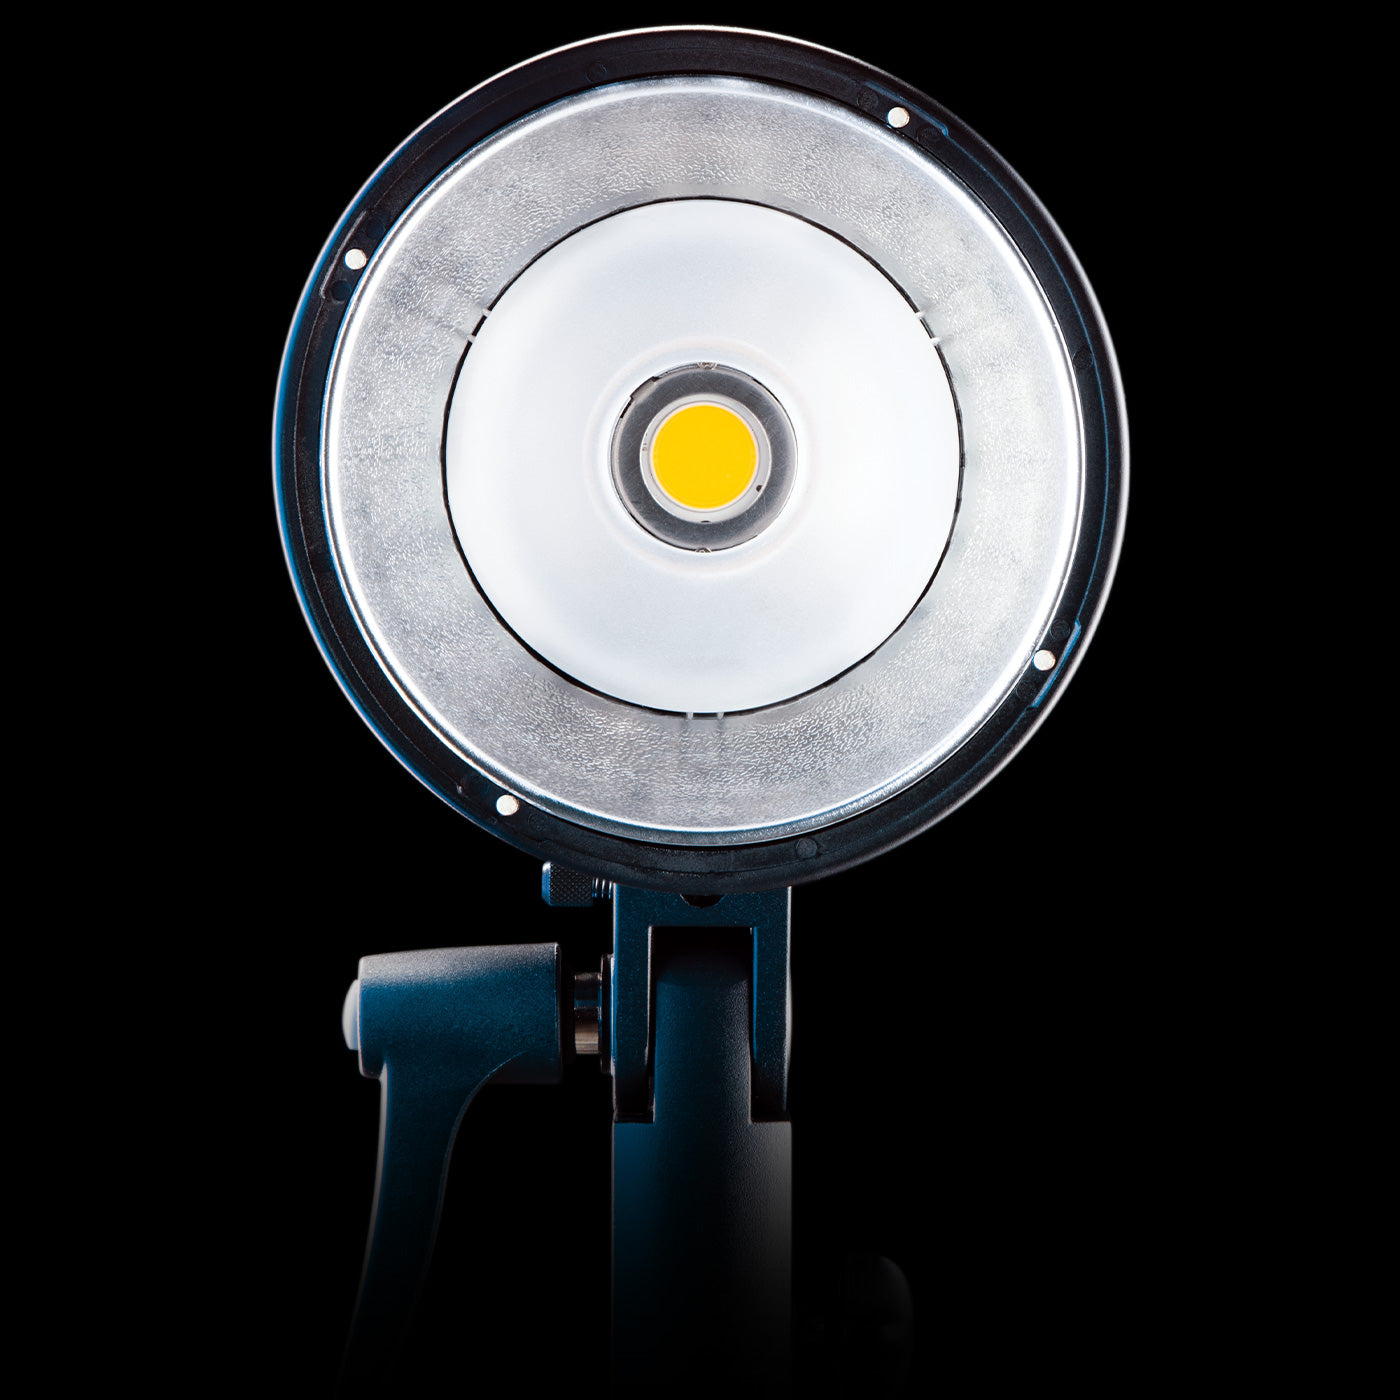 FJ400 Strobe Front Showing LED Modeling Lamp, Flash Tube, and Reflector